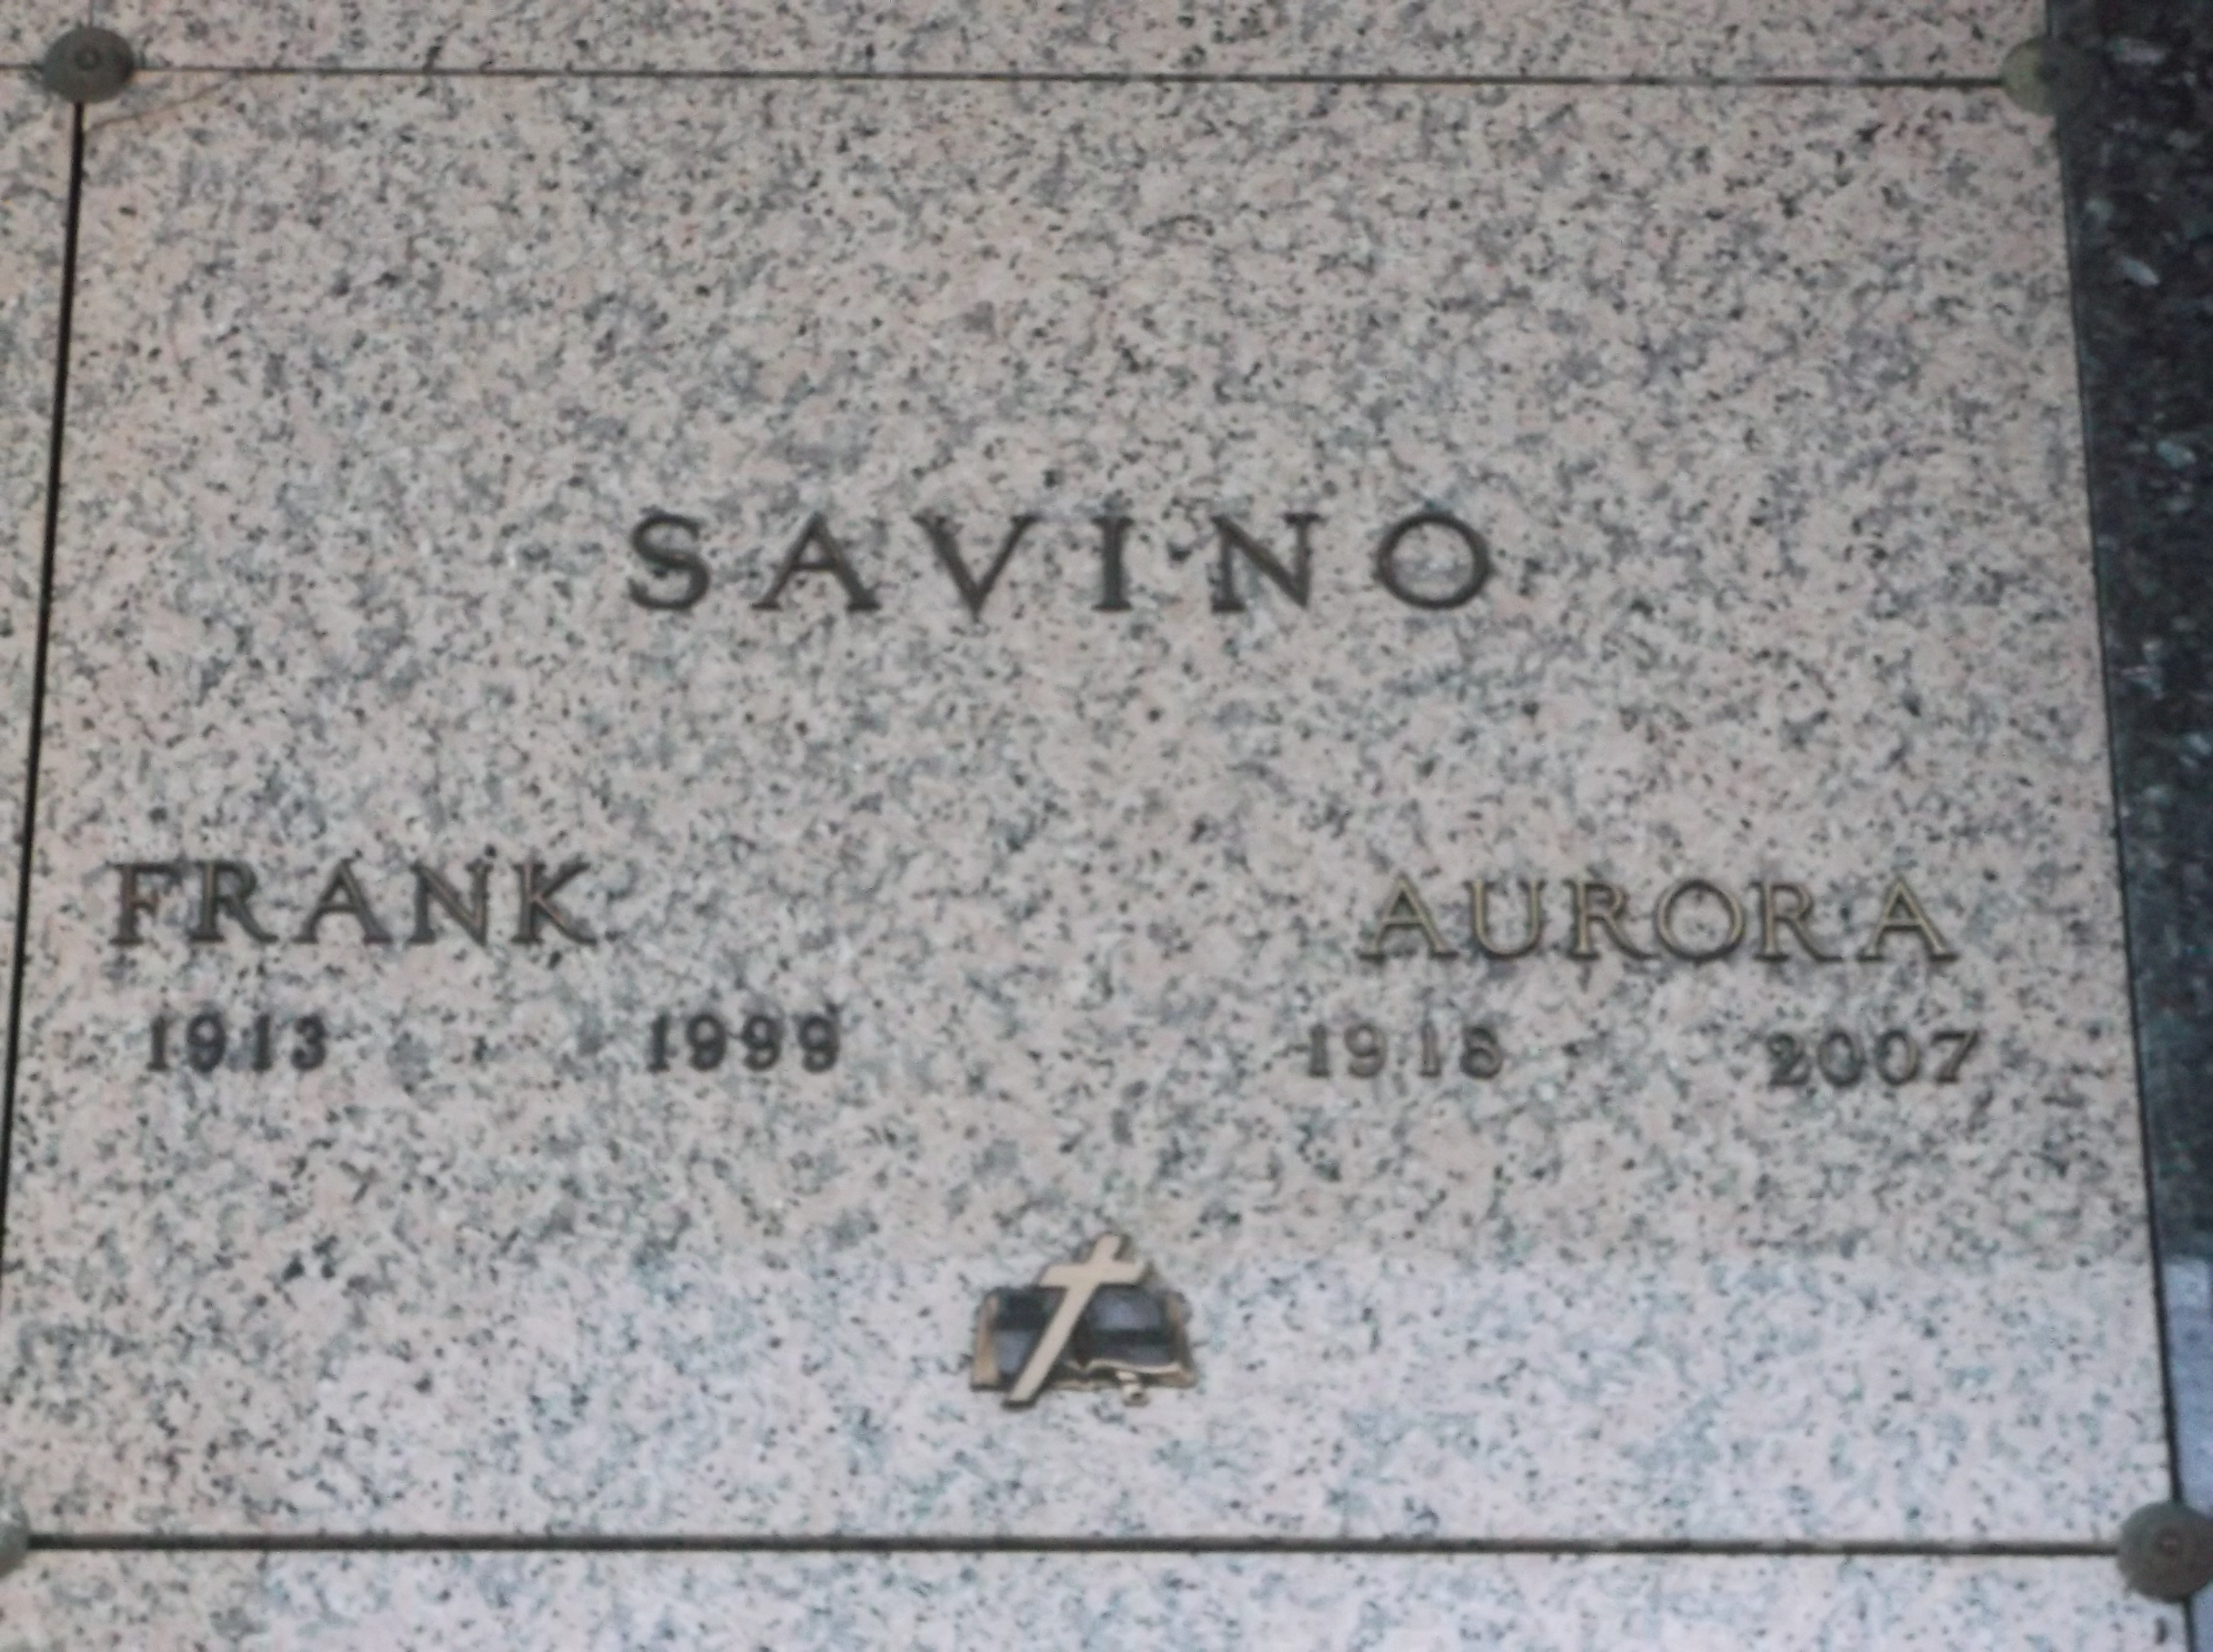 Frank Savino